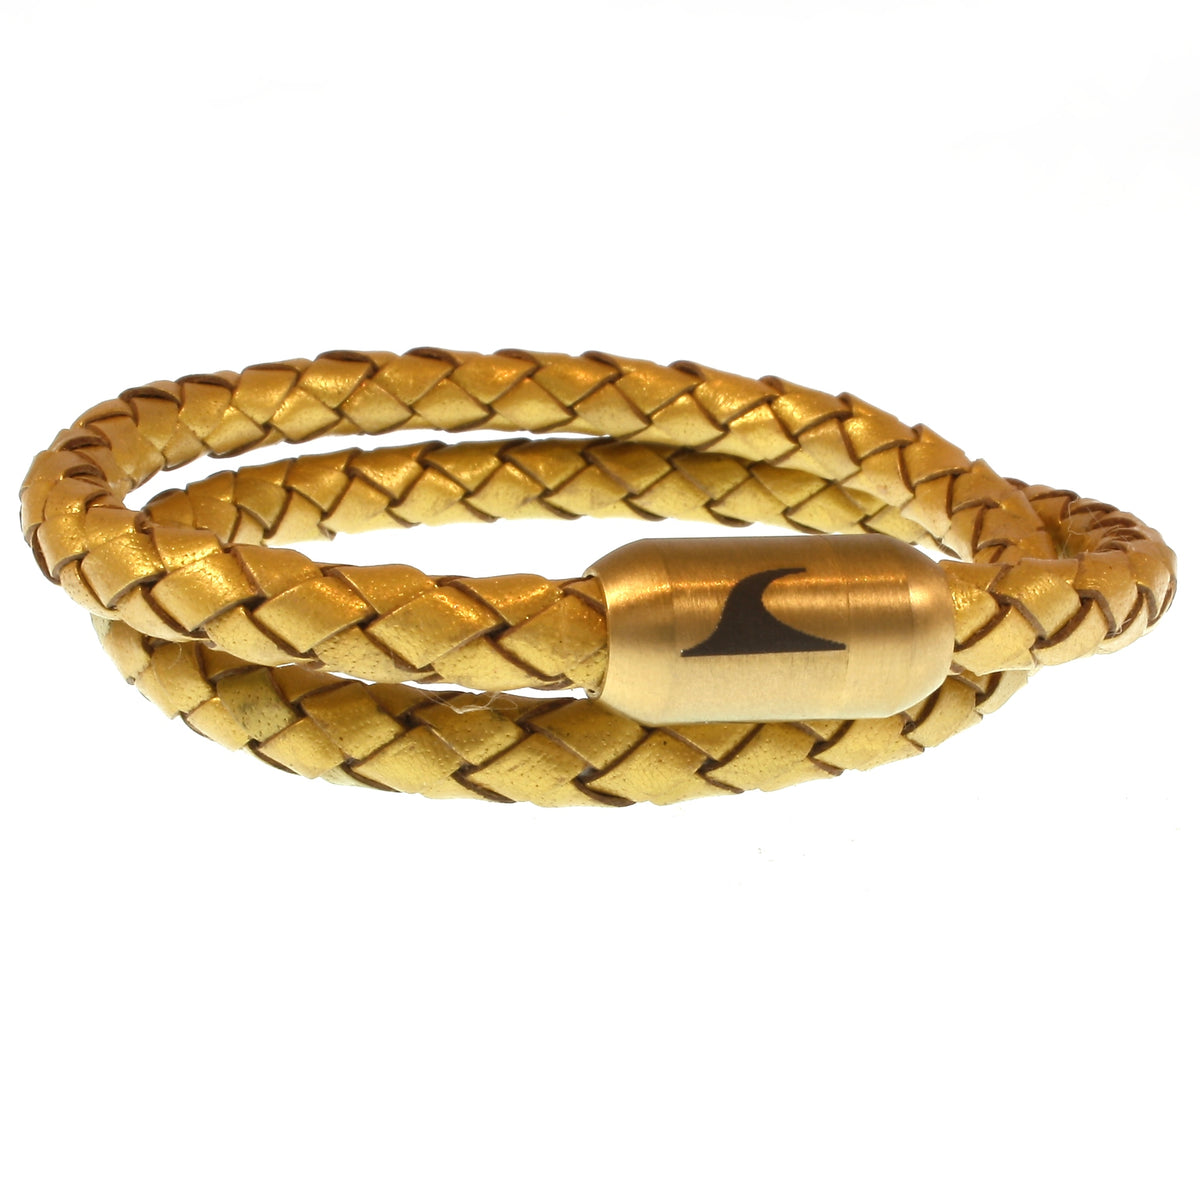 Leder-Armband-Damen-hawaii-gold-geflochten-Edelstahlverschluss-vorn-wavepirate-shop-f